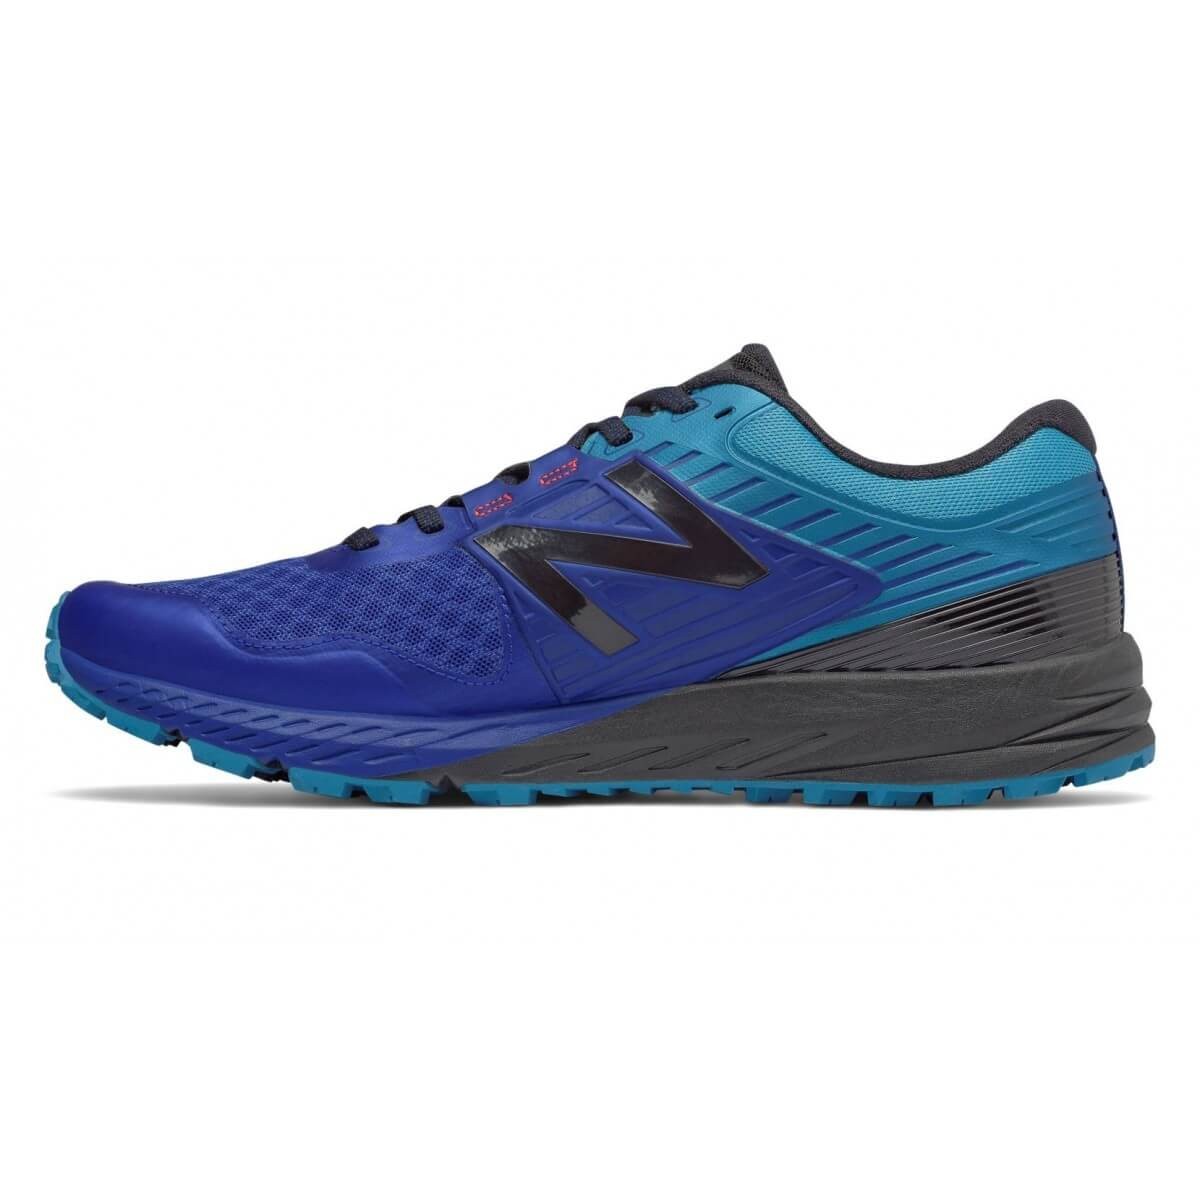 New Balance 910v4 Trail Blue Black Shoes